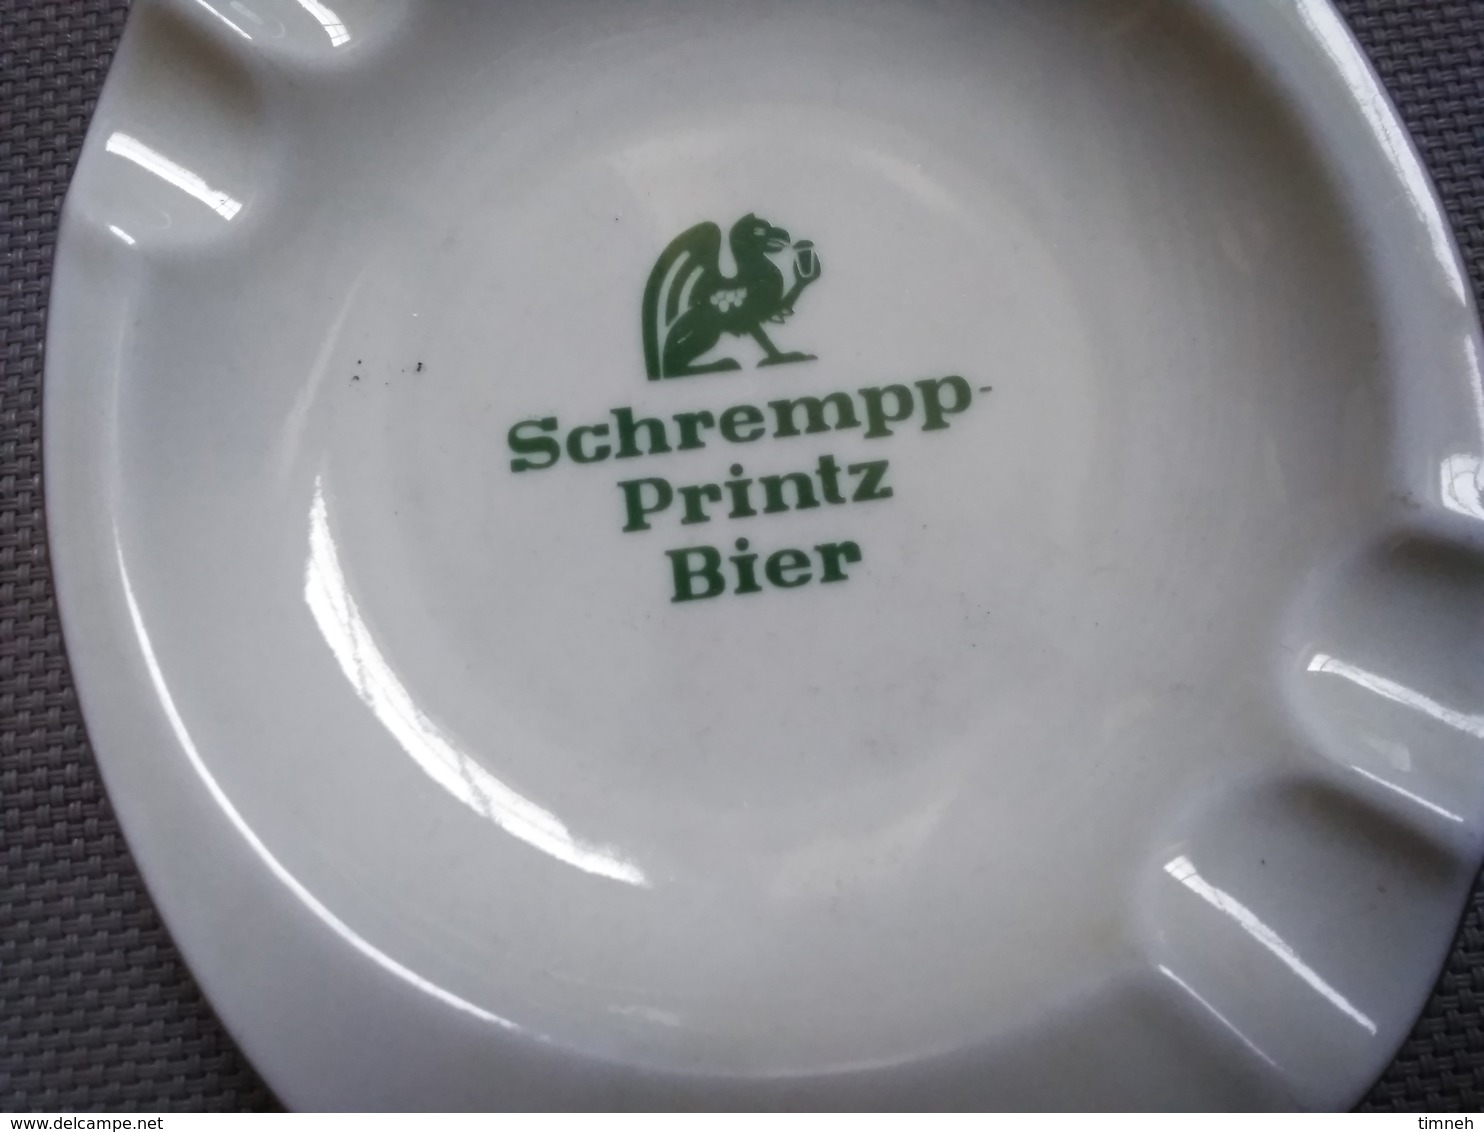 FAÏENCE EMIL SAHM PLANKENHAMMER FLOSS BAVARIA GERMANY - SCHREMPP PRINTZ BIER - CENDRIER 15x12cm - FAÏENCE - Cendriers